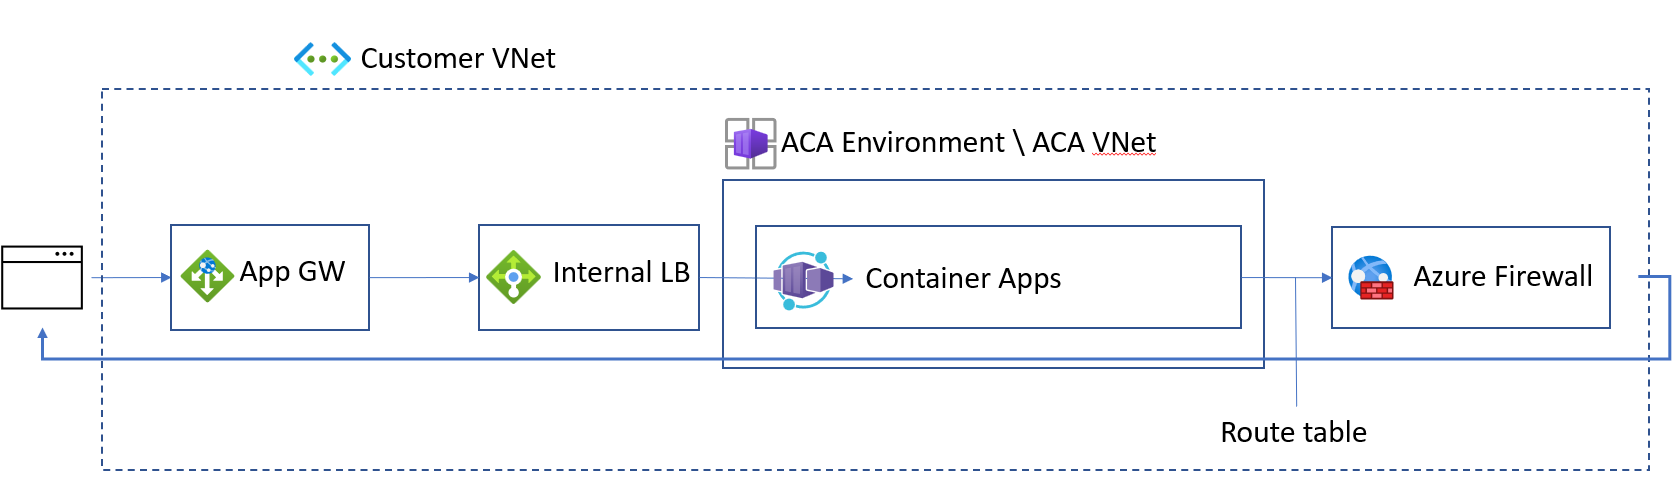 Container Apps のネットワークを完全にロックダウンする方法を示す図。